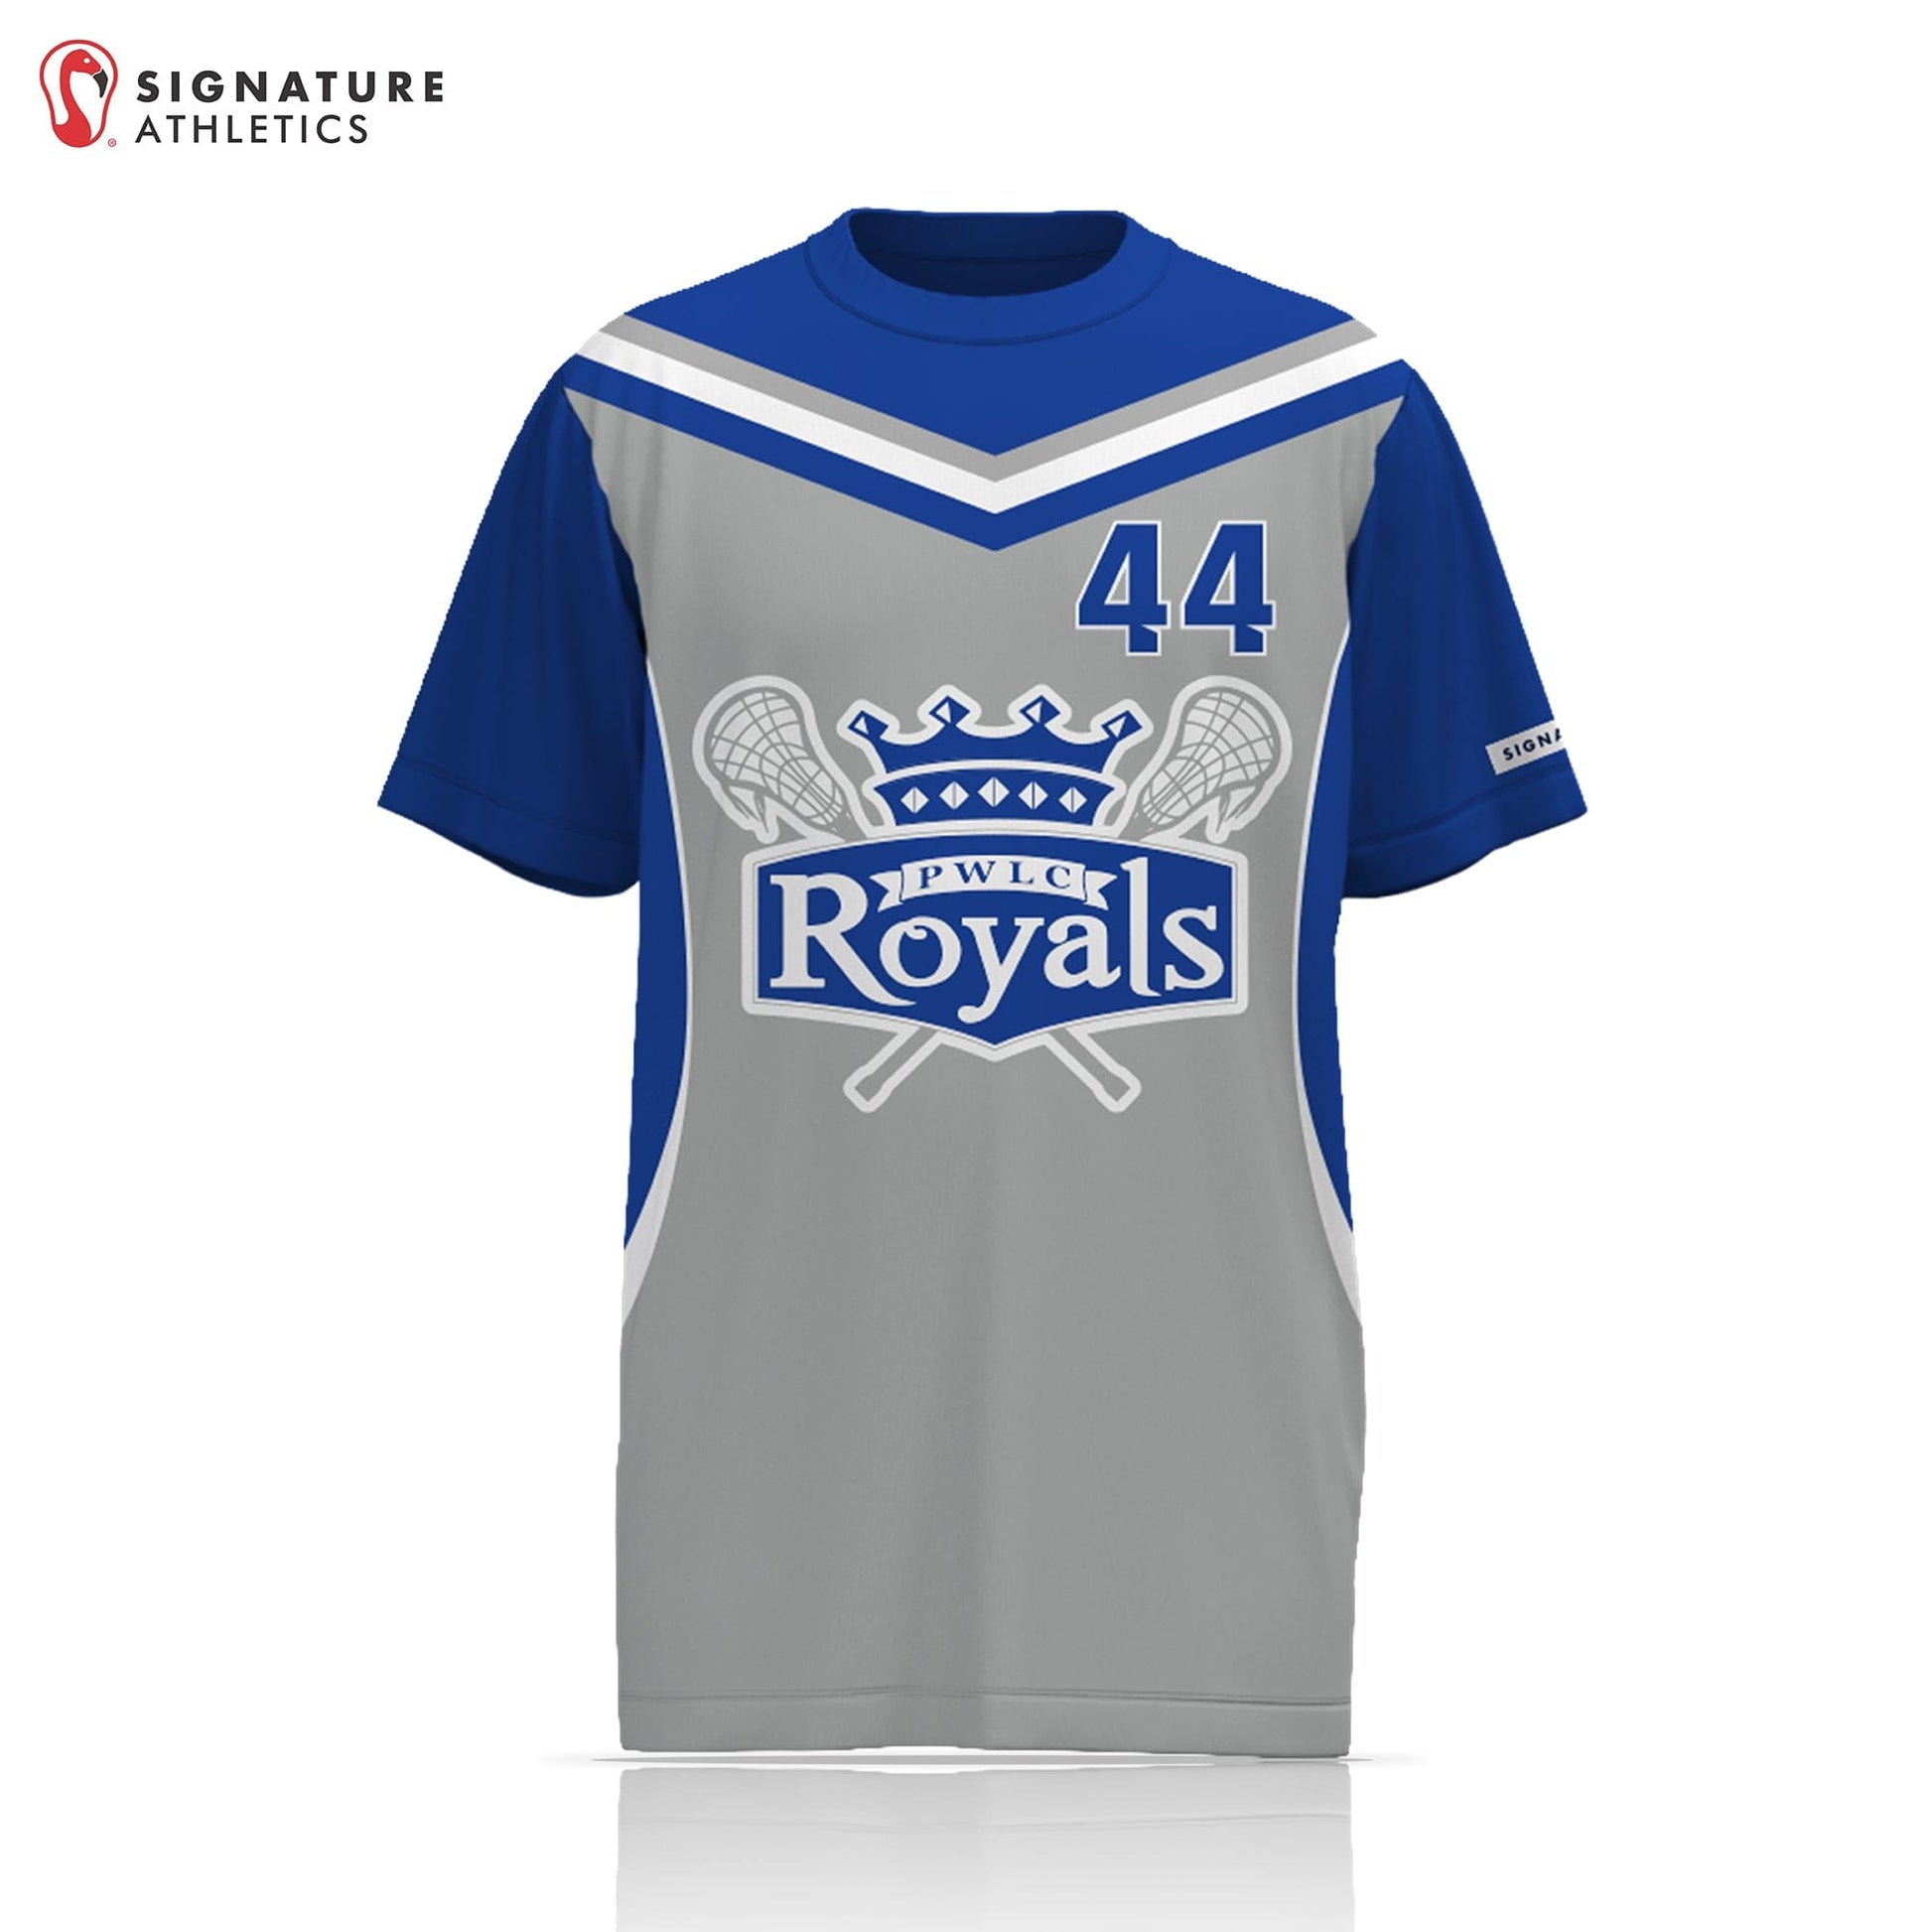 Prince William Lacrosse Club - Royals Unisex Performance Short Sleeve Shooting Shirt - Basic 2.0:Boys 2027 Signature Lacrosse